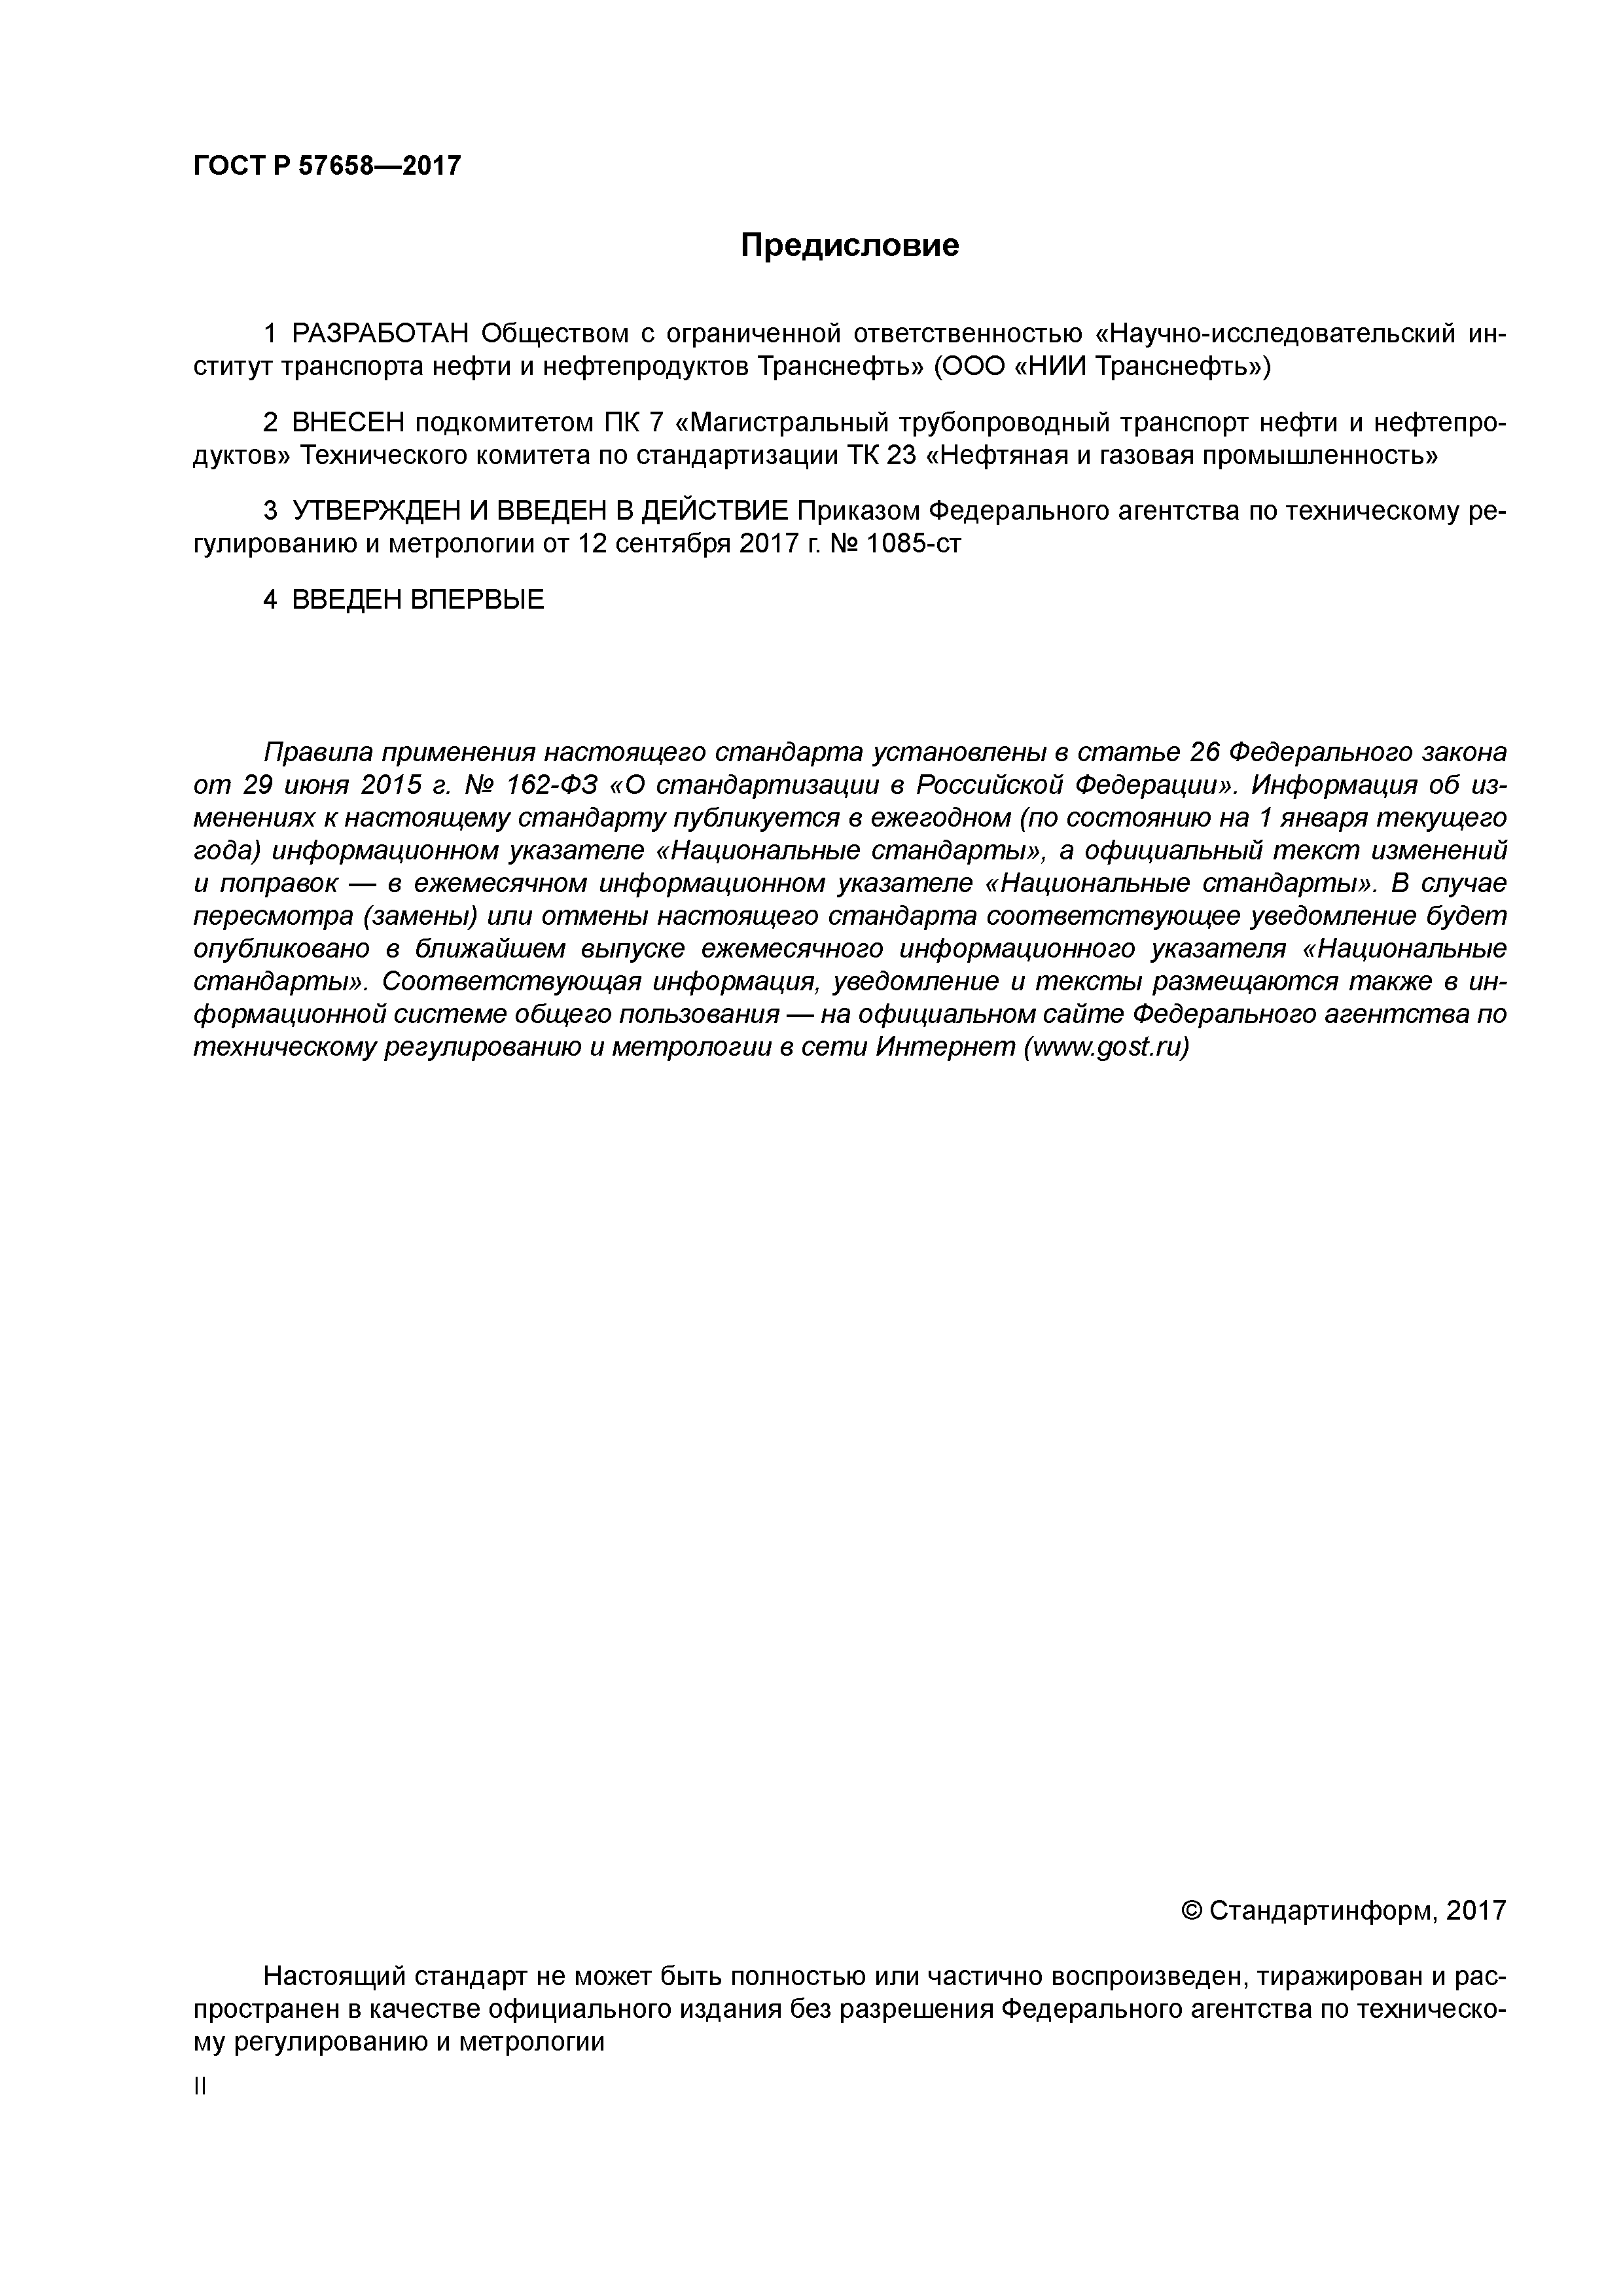 ГОСТ Р 57658-2017